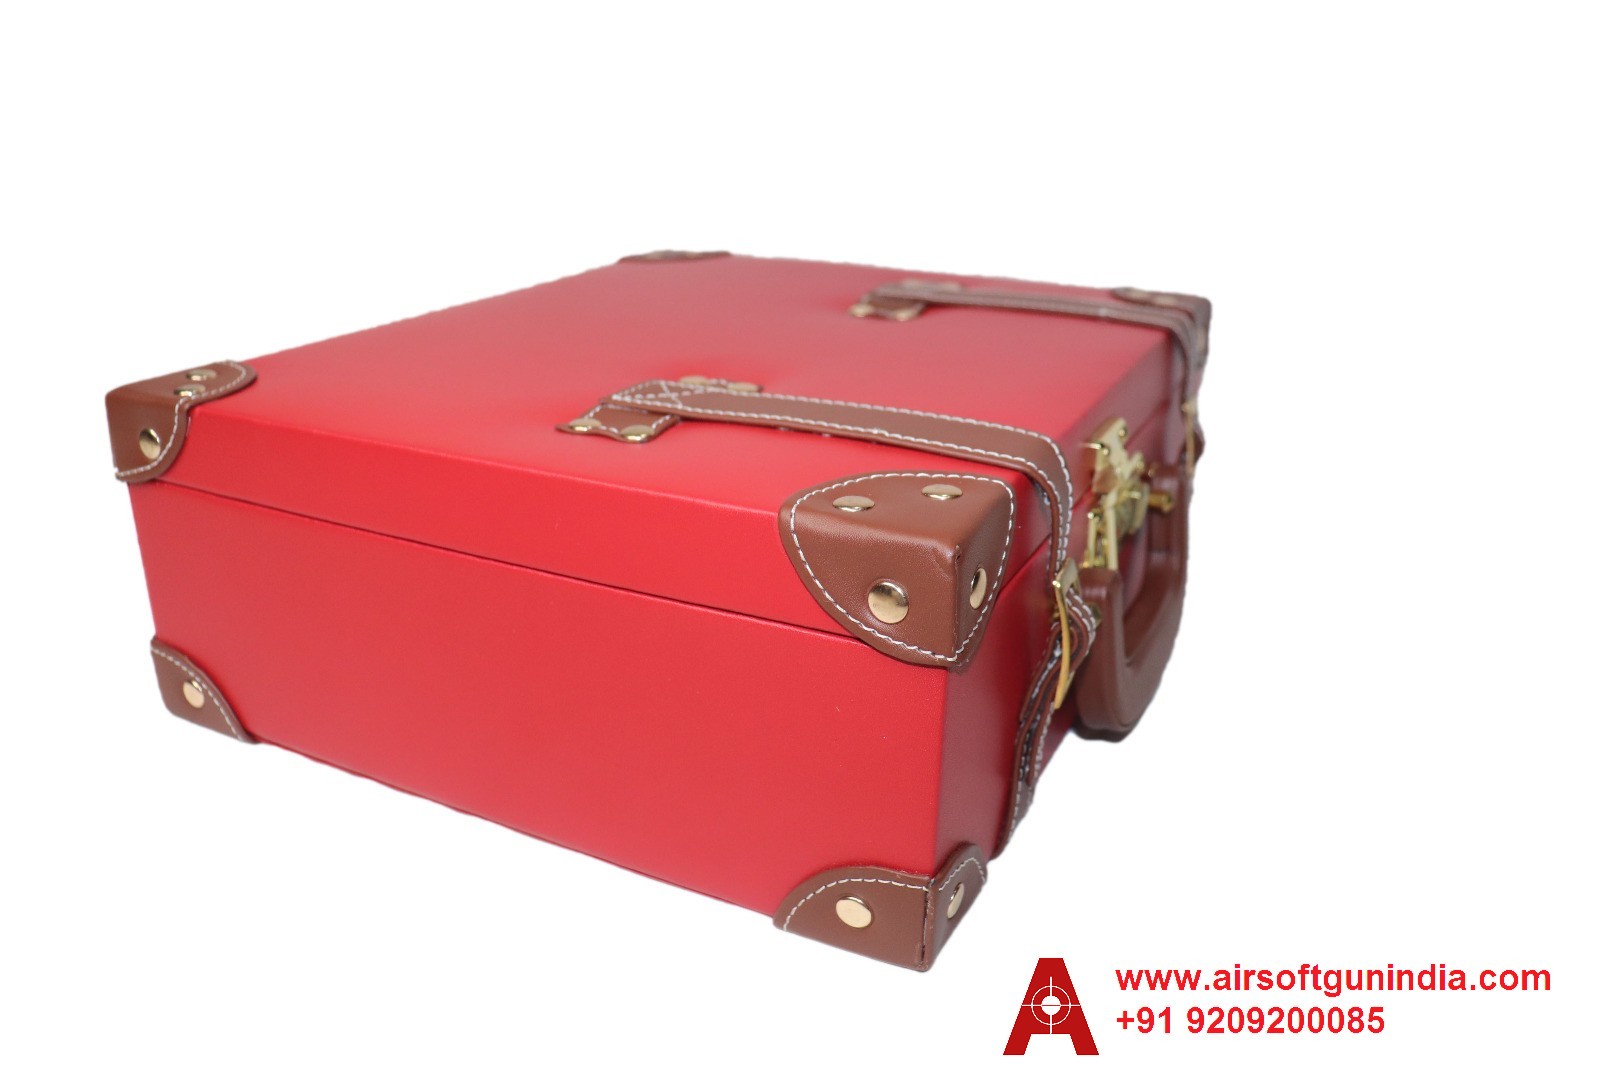 Vintage Retro Luxury Suitcase/Gun Box In Red Shade By Airsoft Gun India